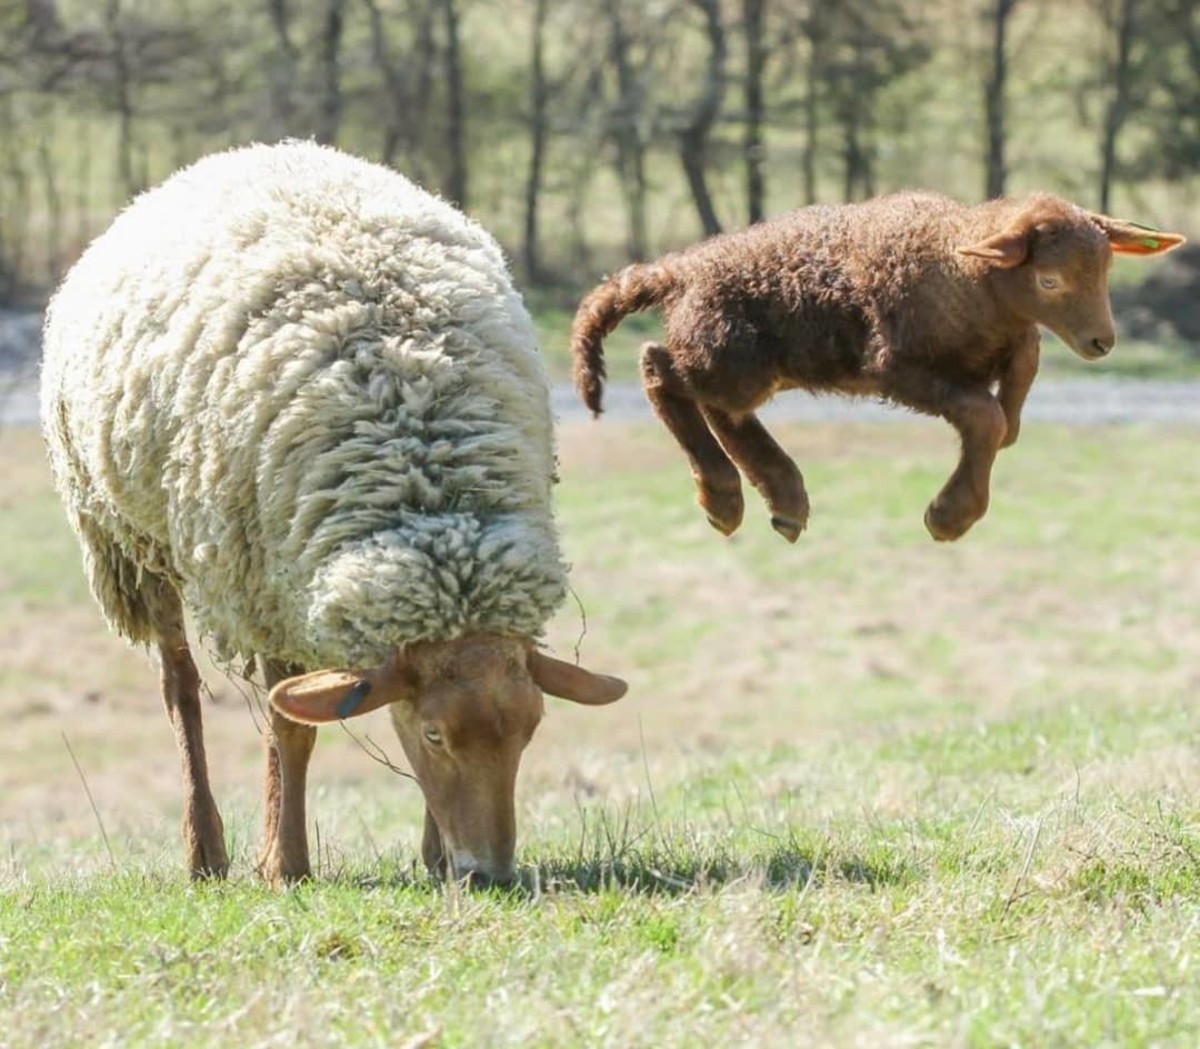 Tunis sheep are two types: Tunis Barbarin raised for meat and American Tunis raised for meat and wool.